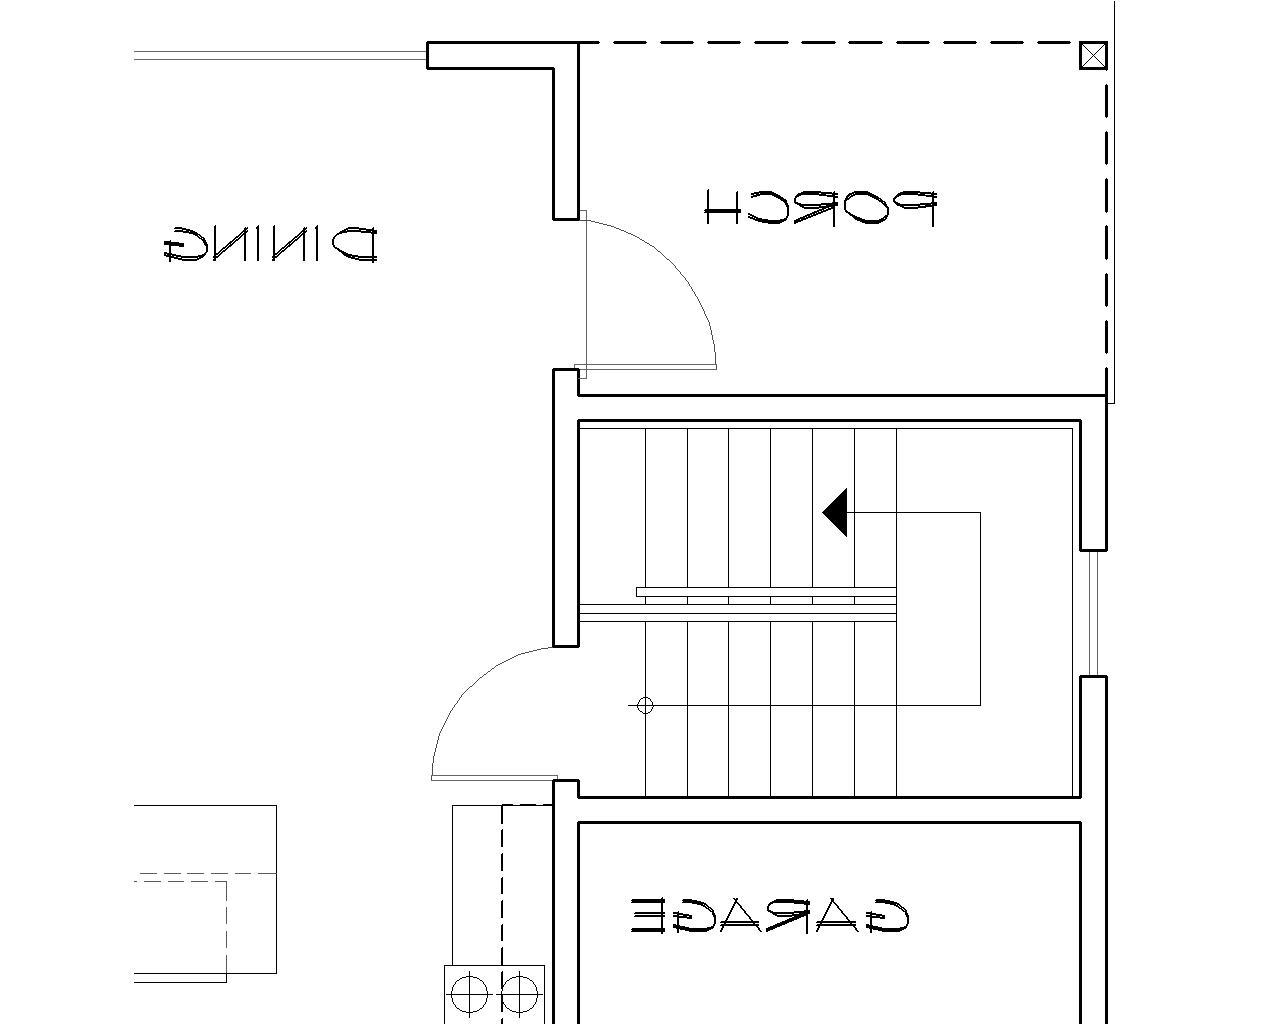 Basement Stair Location image of Clarksburg House Plan